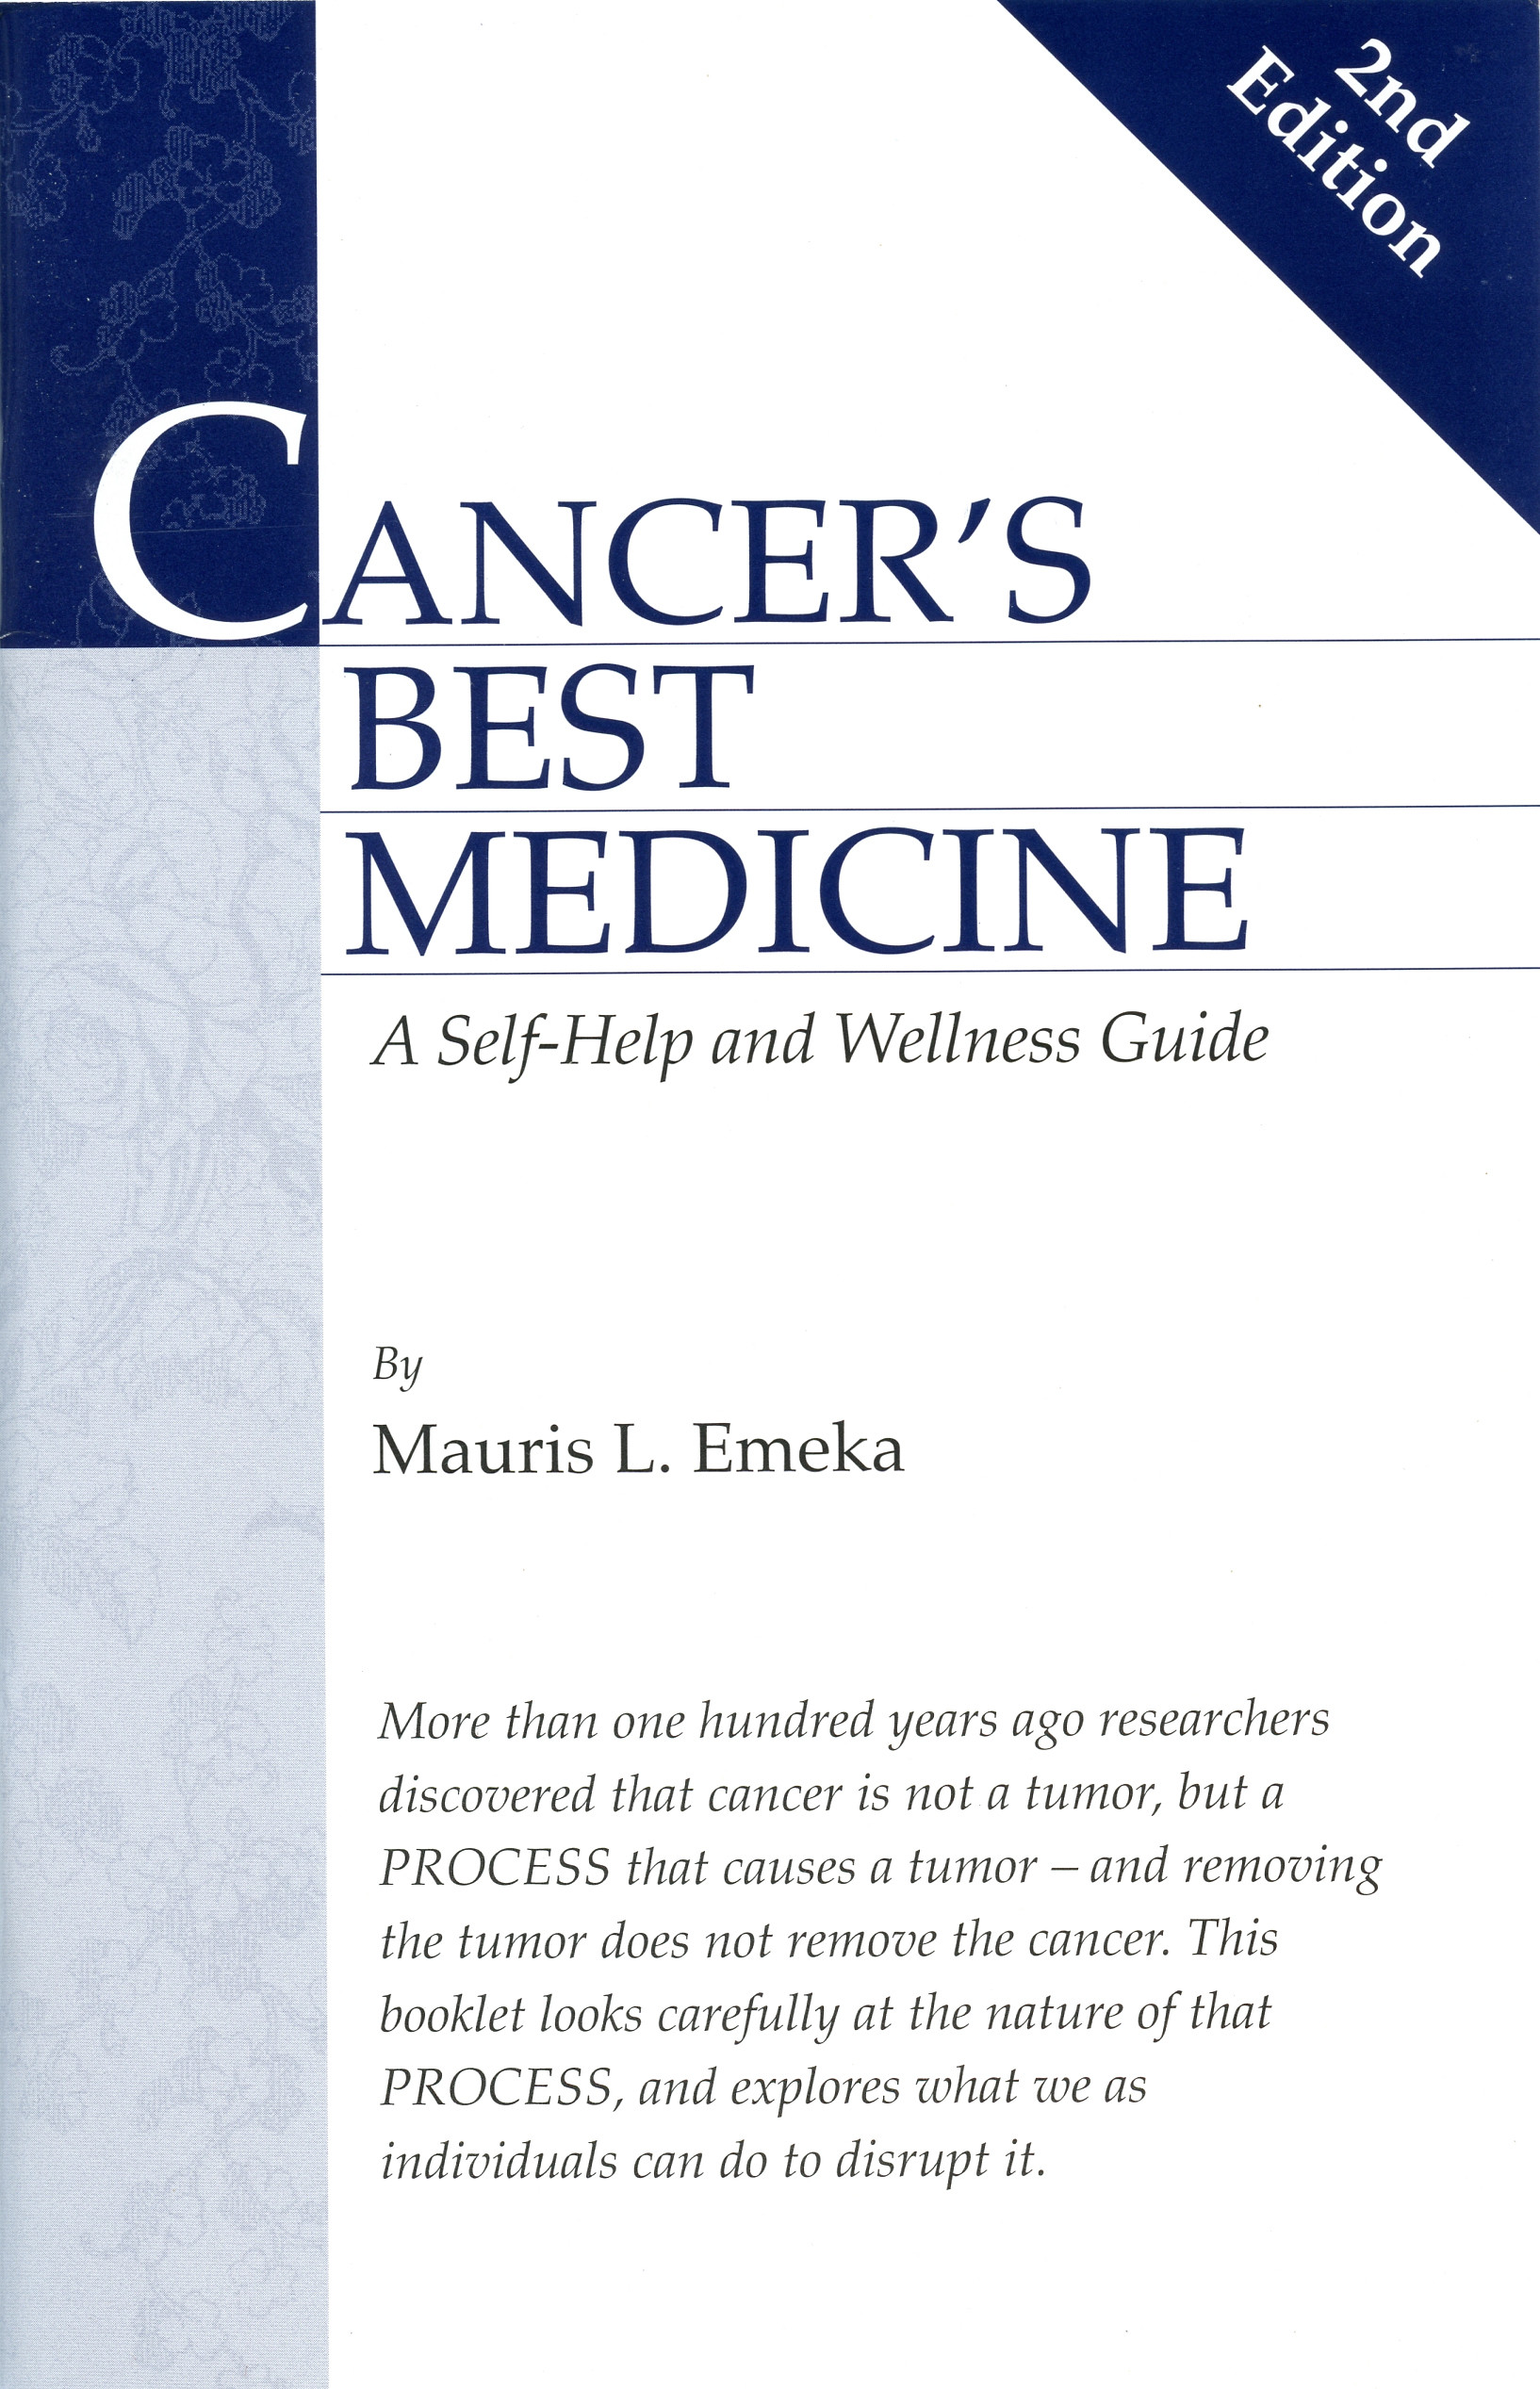 Cancer's Best Medicine